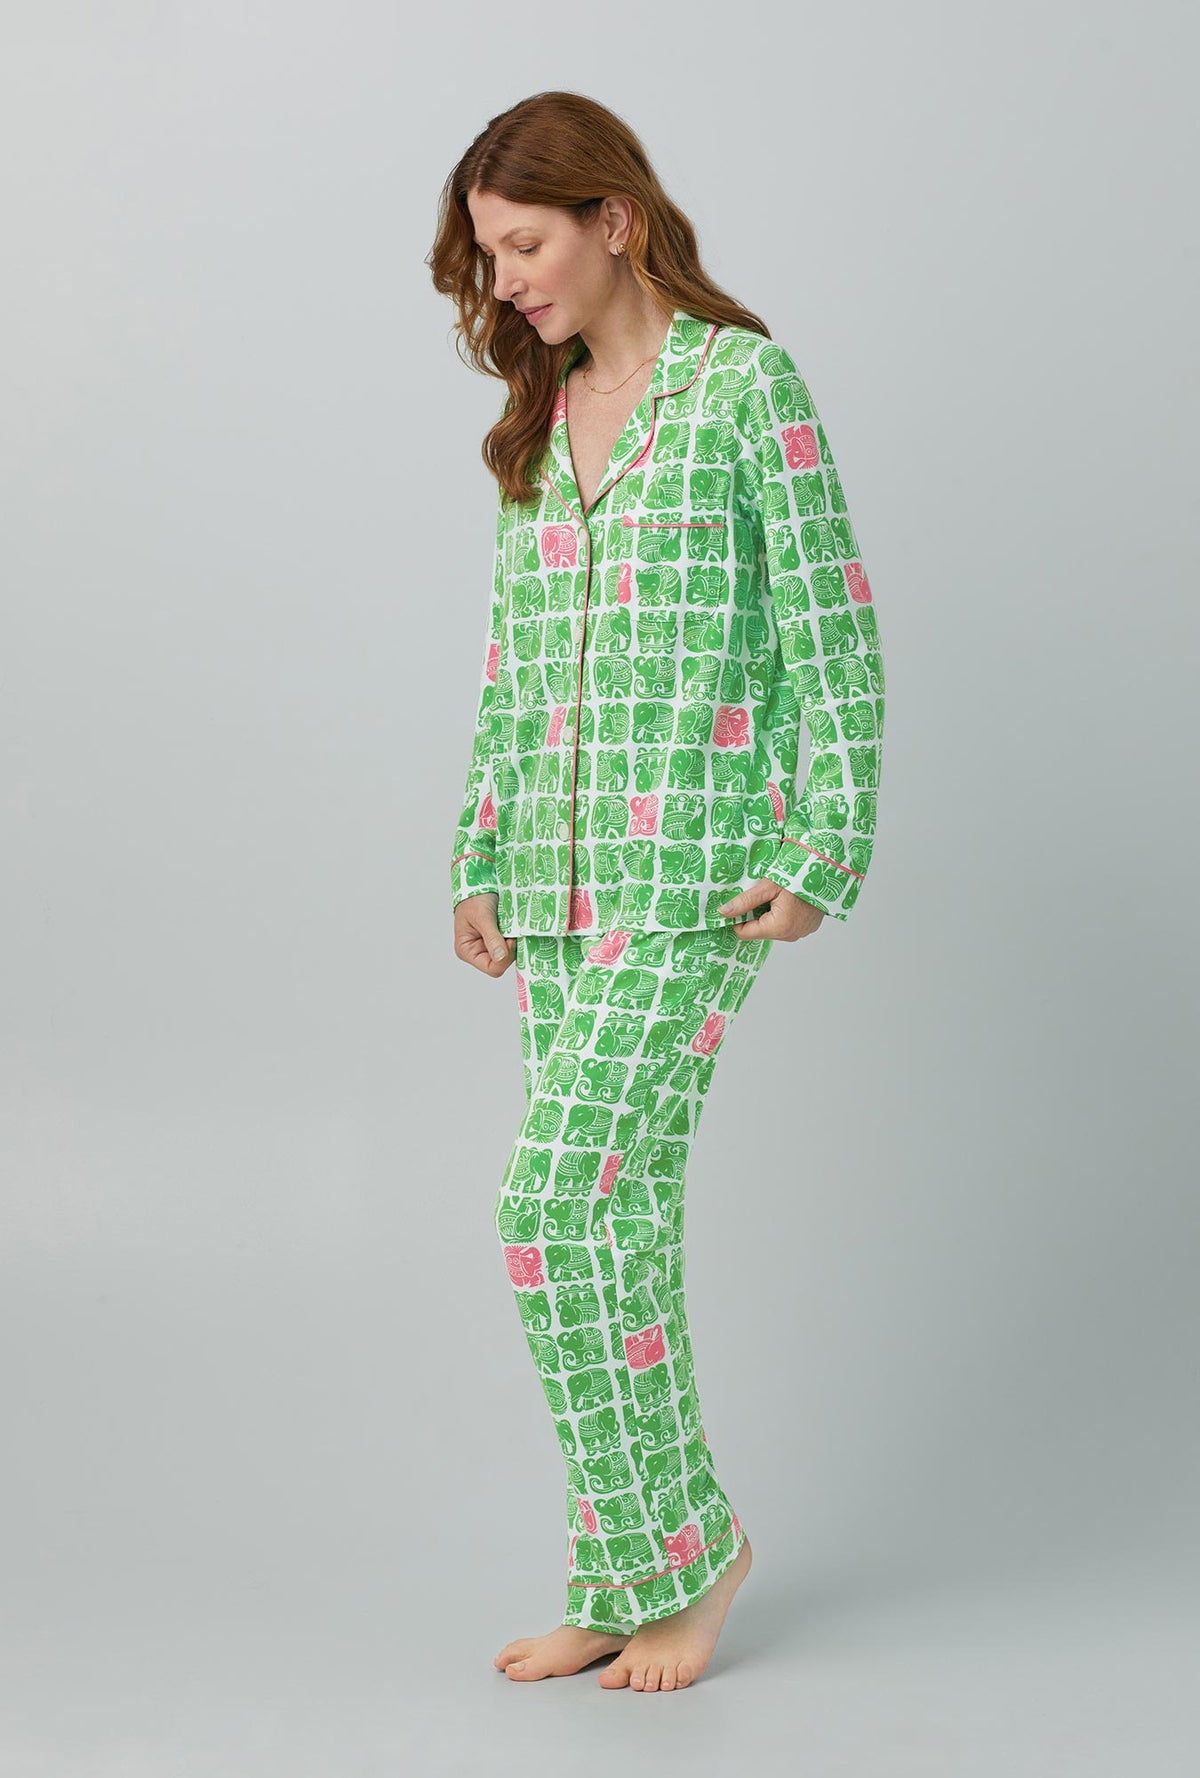 A lady wearing green Long Sleeve Classic Stretch Jersey PJ Set with  Turk Elephants print